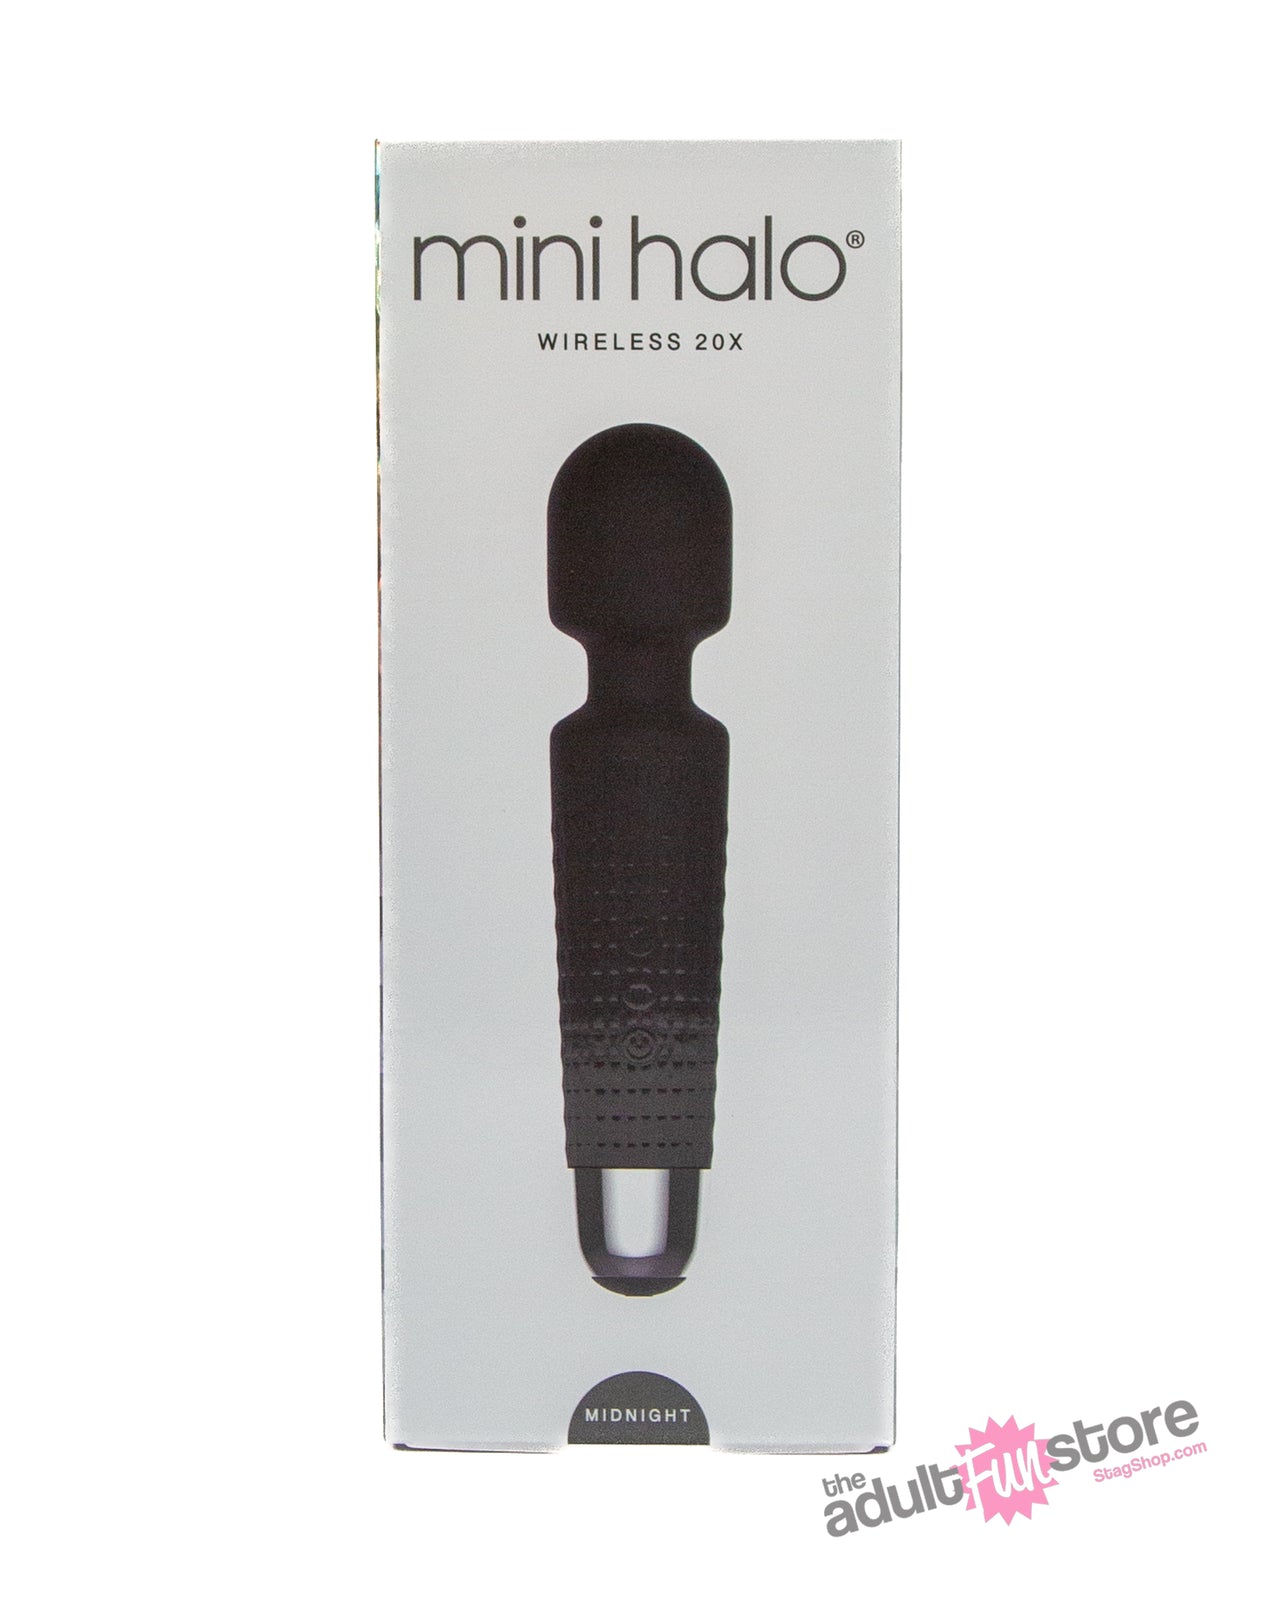 Shibari - Mini Halo Wireless 20X Wand Vibrator - Midnight Black - Stag Shop